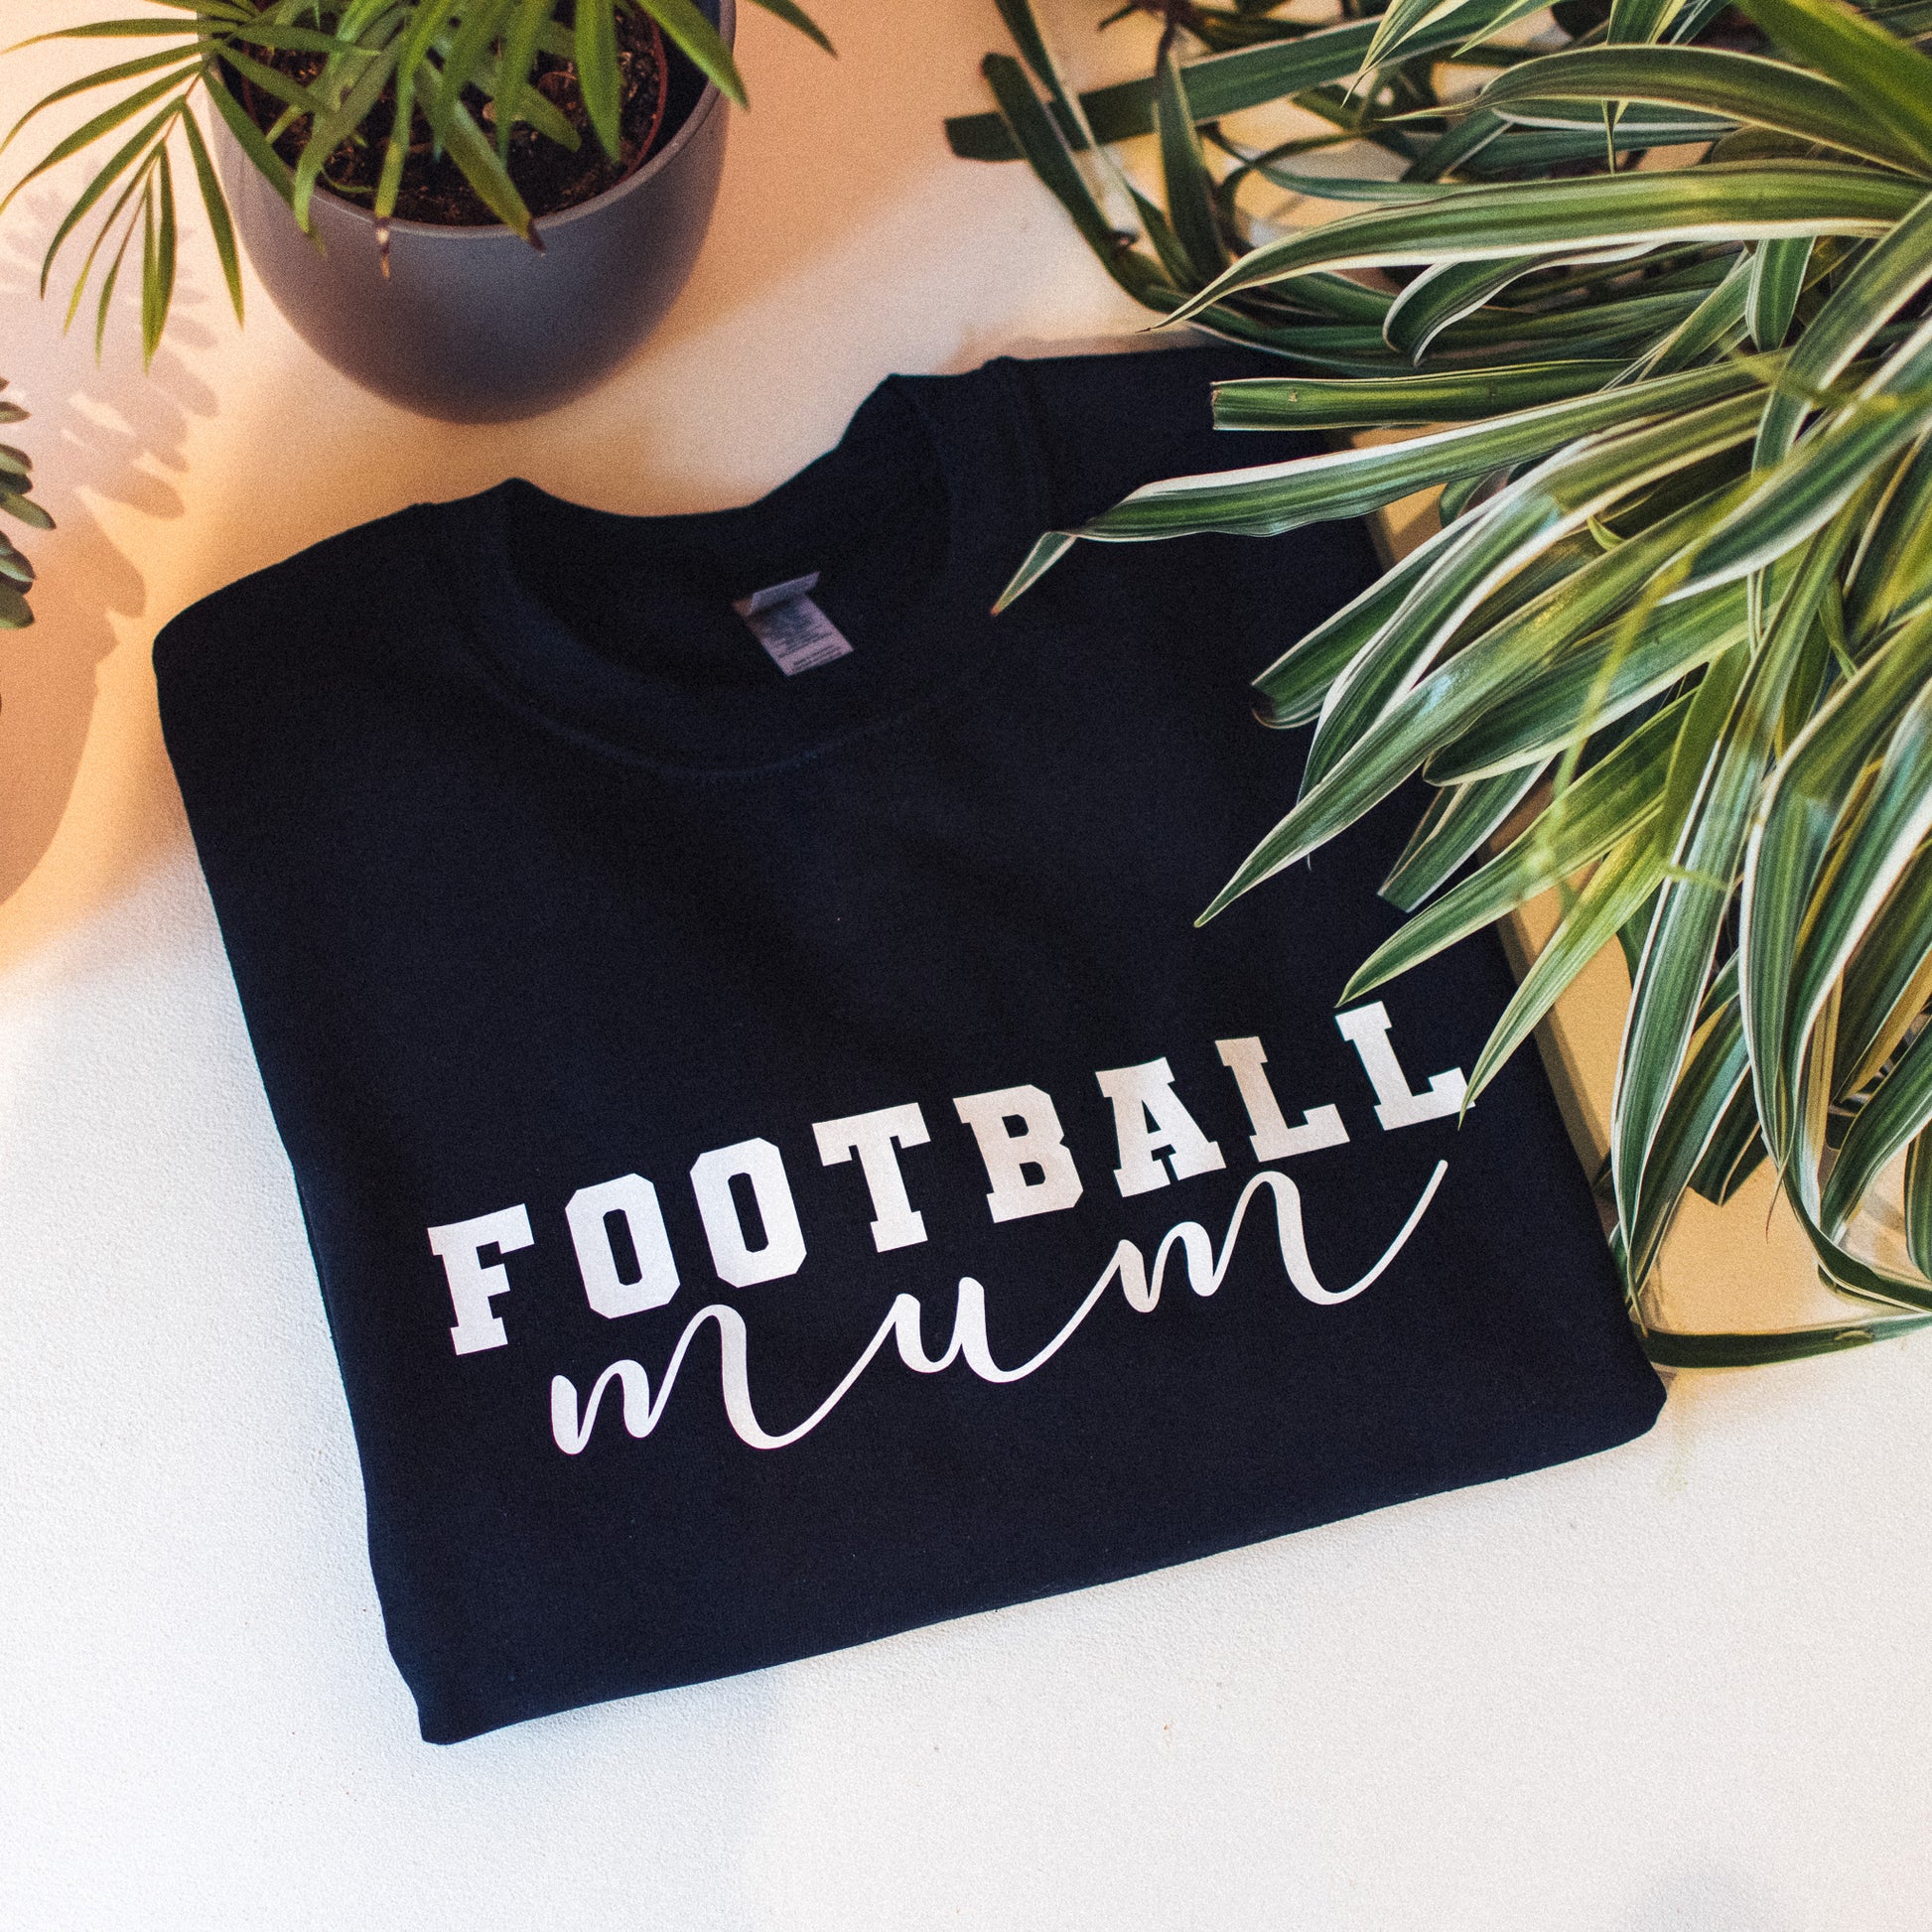 Football Mum Sweatshirt in Black, with white text - F&B Crafts